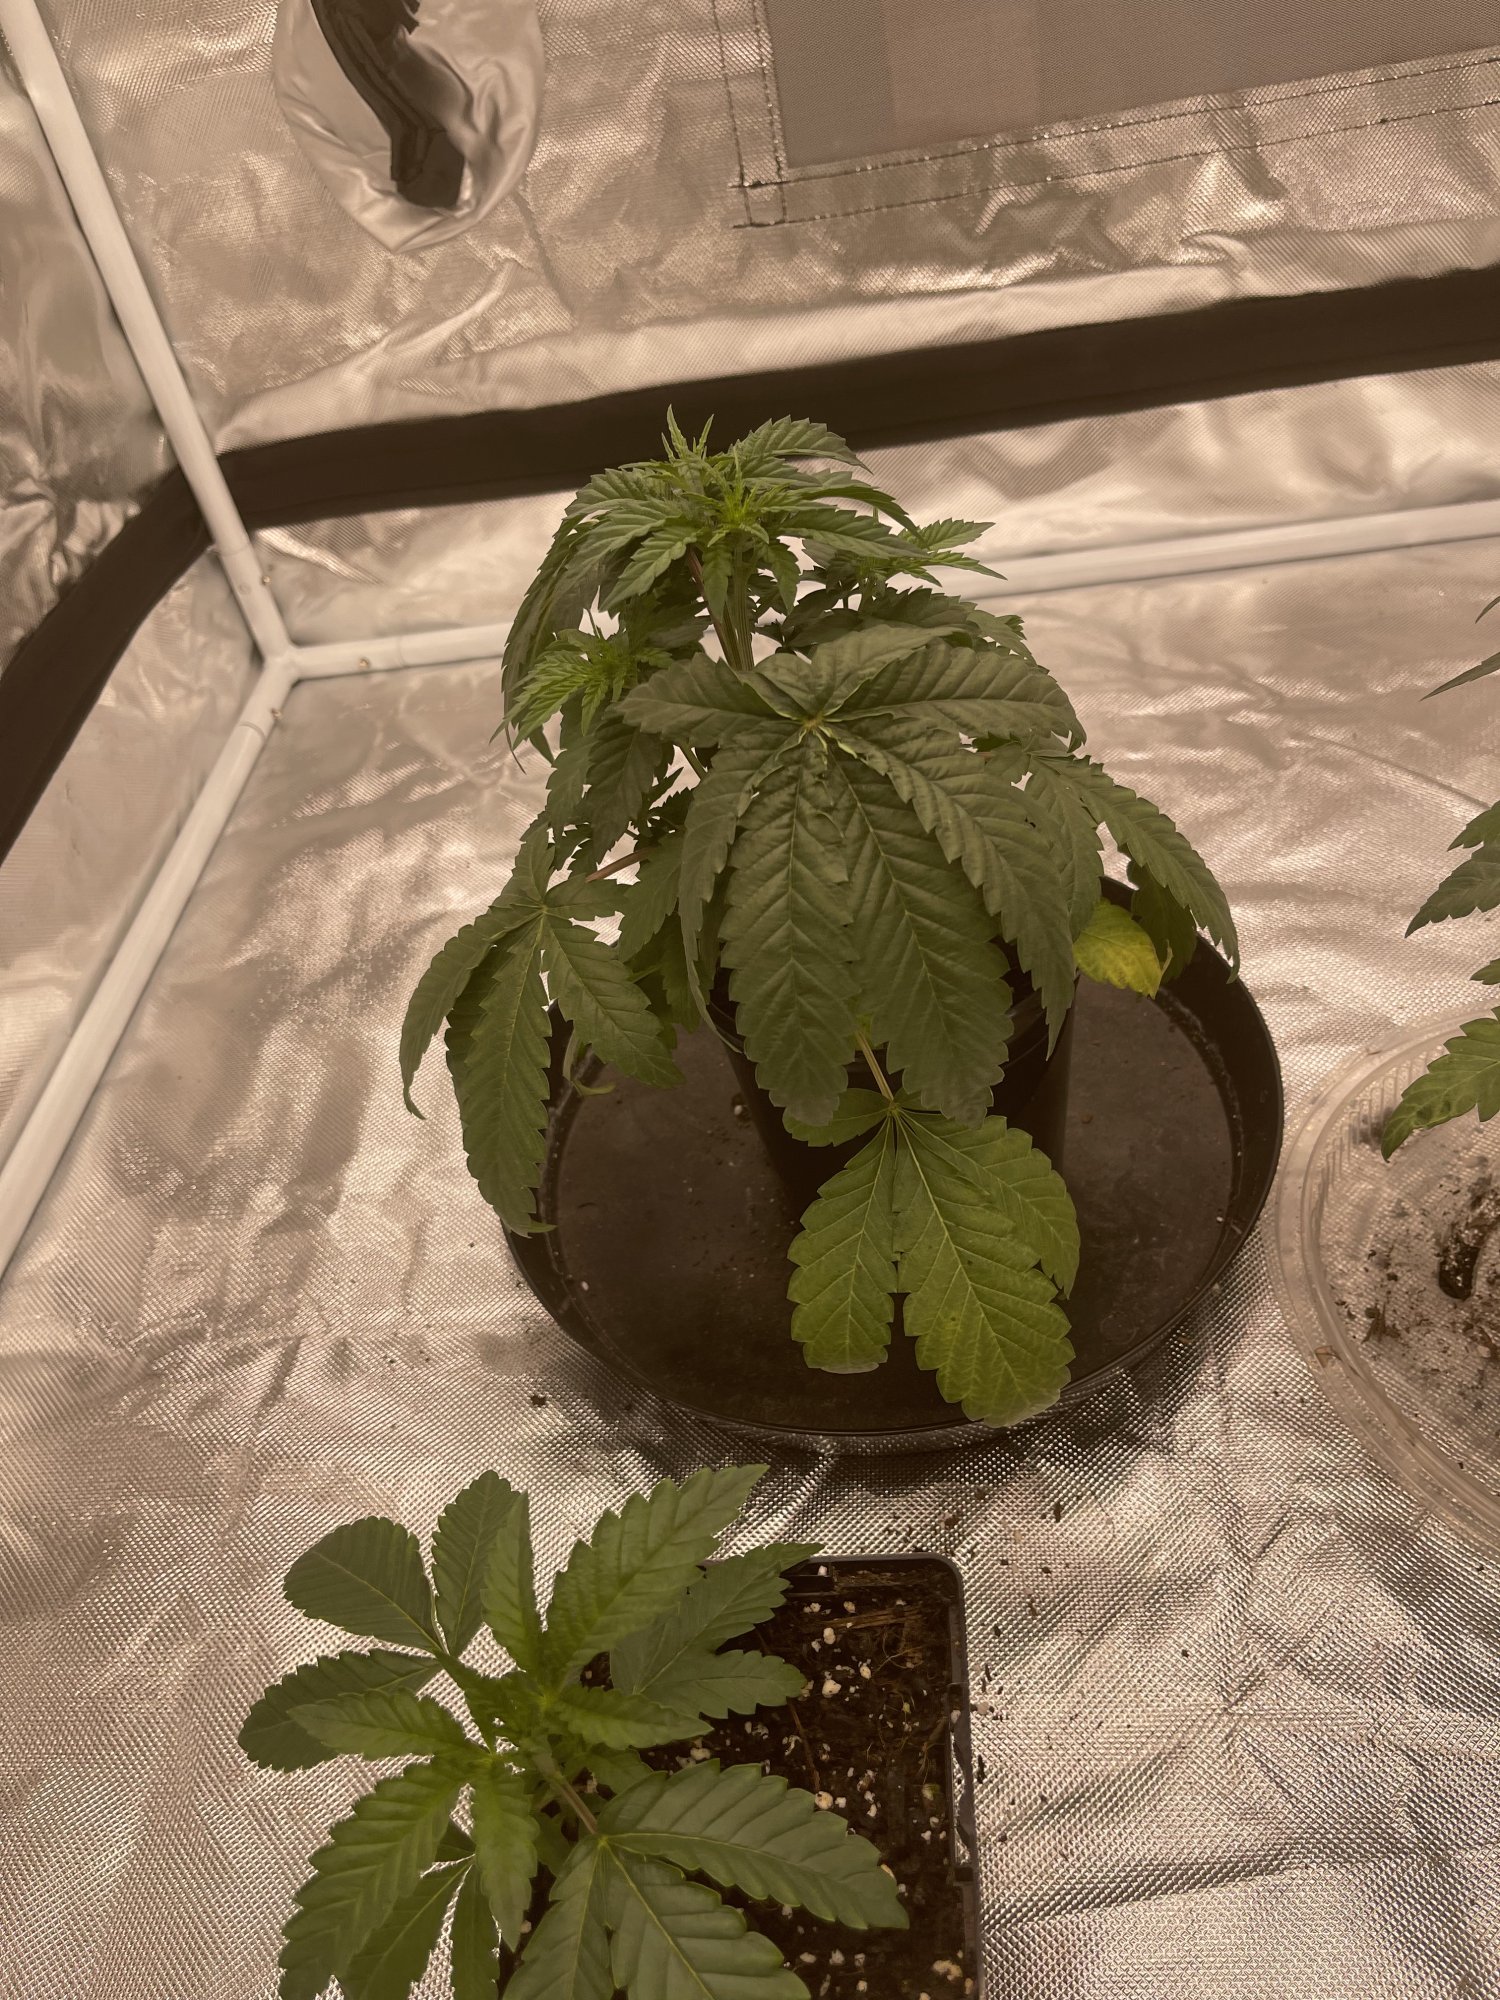 Transplant help with 3 week old plants